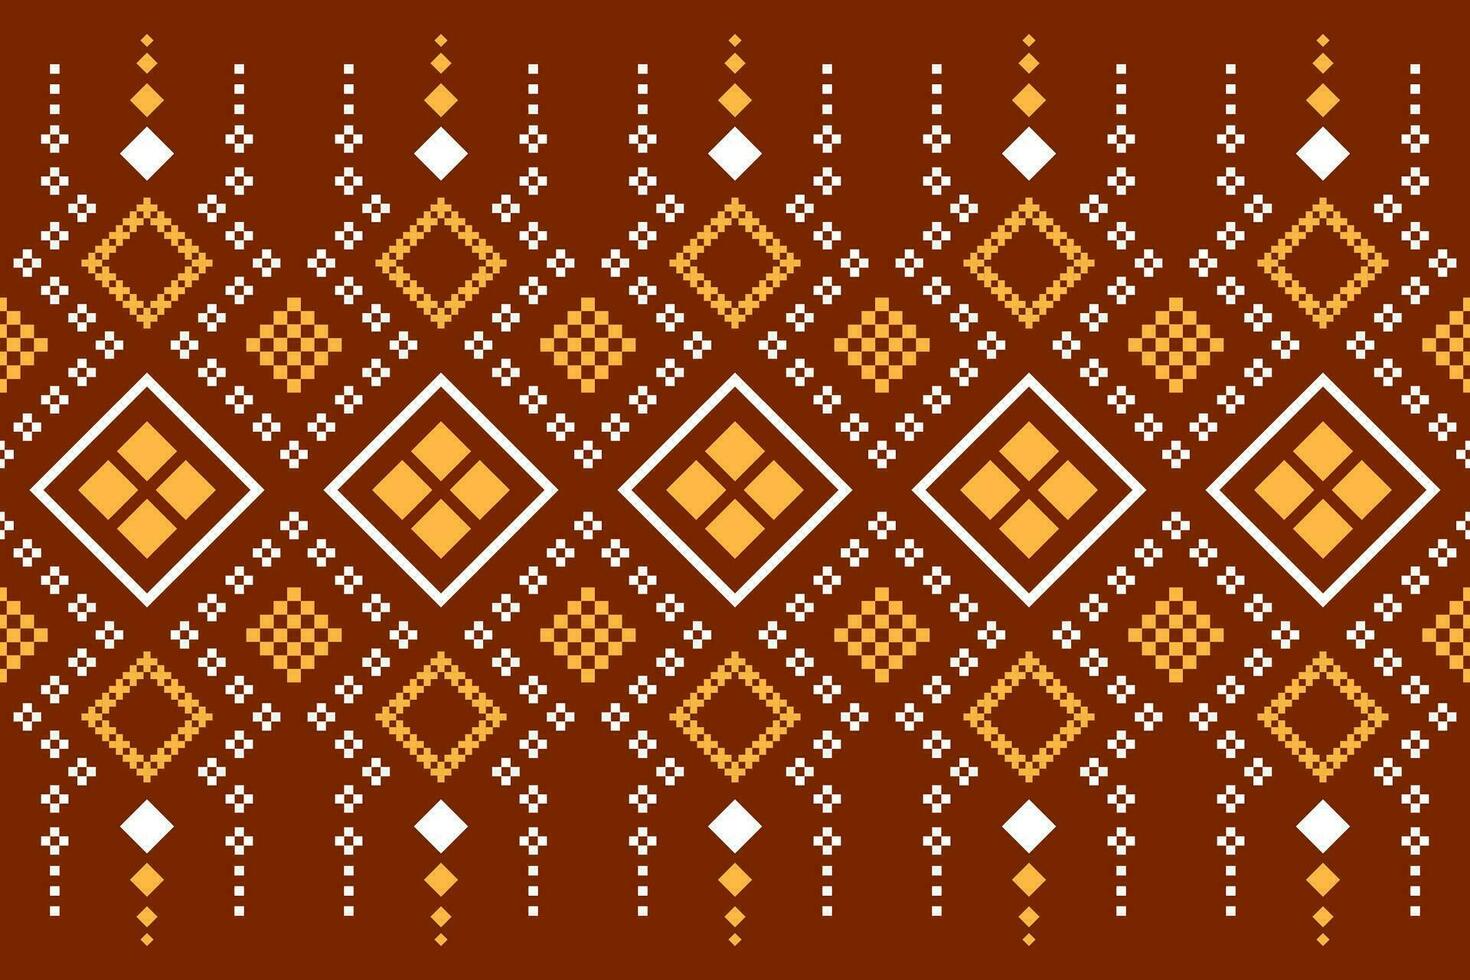 laranja safras Cruz ponto tradicional étnico padronizar paisley flor ikat fundo abstrato asteca africano indonésio indiano desatado padronizar para tecido impressão pano vestir tapete cortinas e sarongue vetor